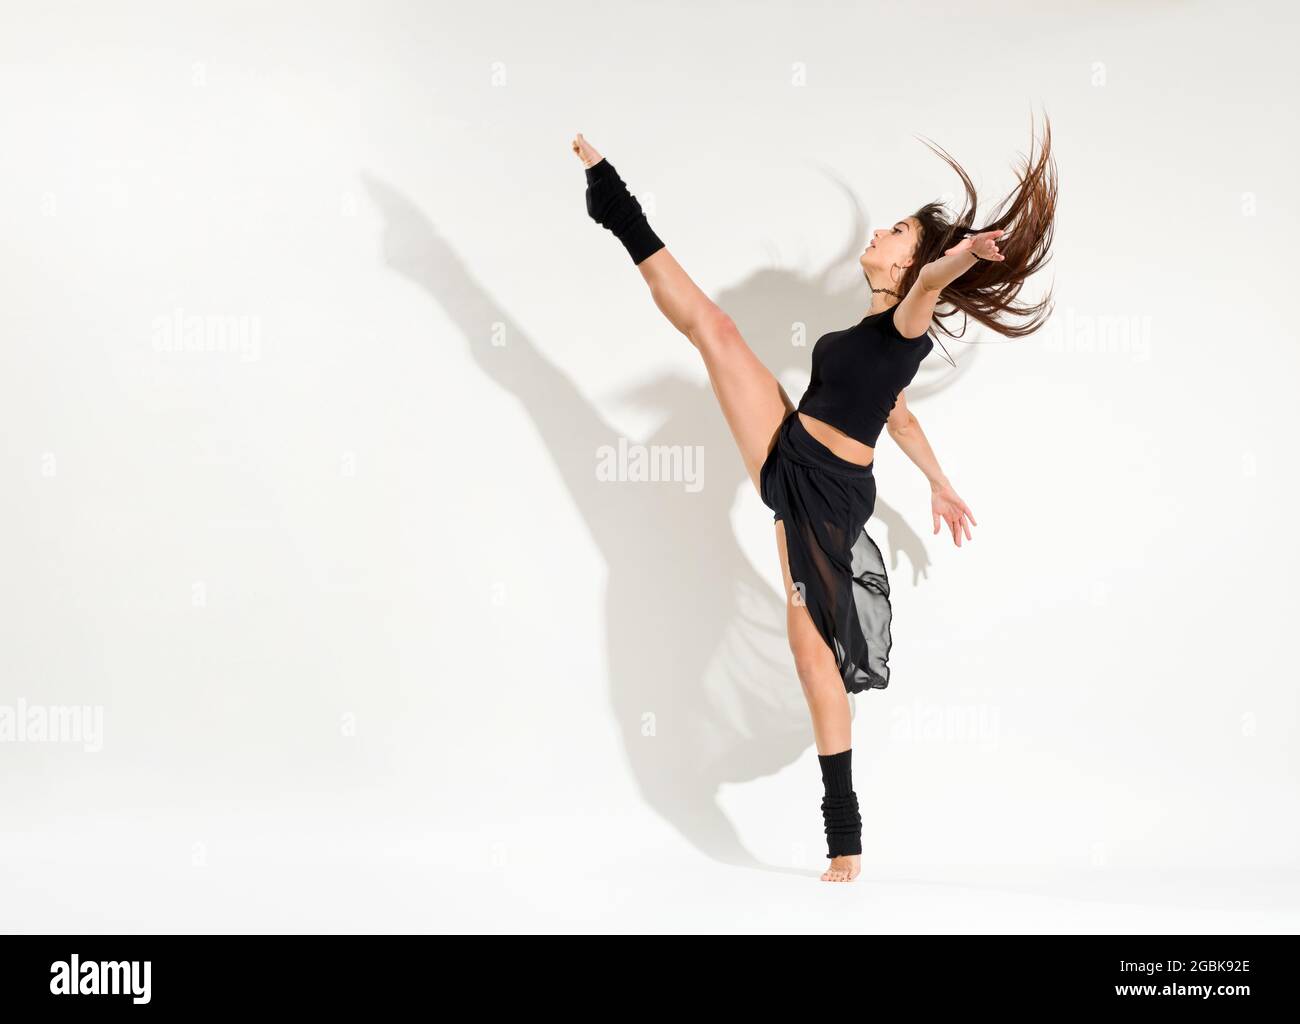 a woman making dance poses Stock Photo - Alamy